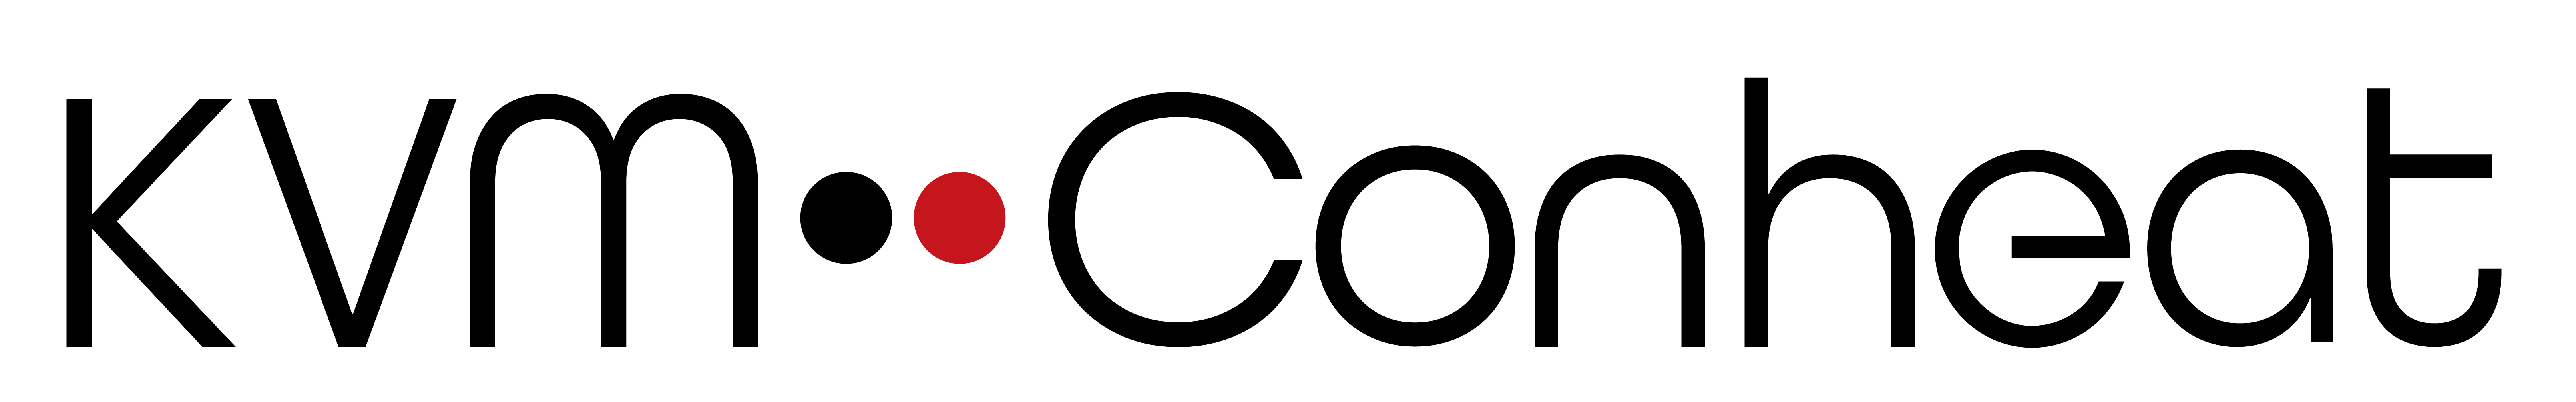 KVM-Conheat logo